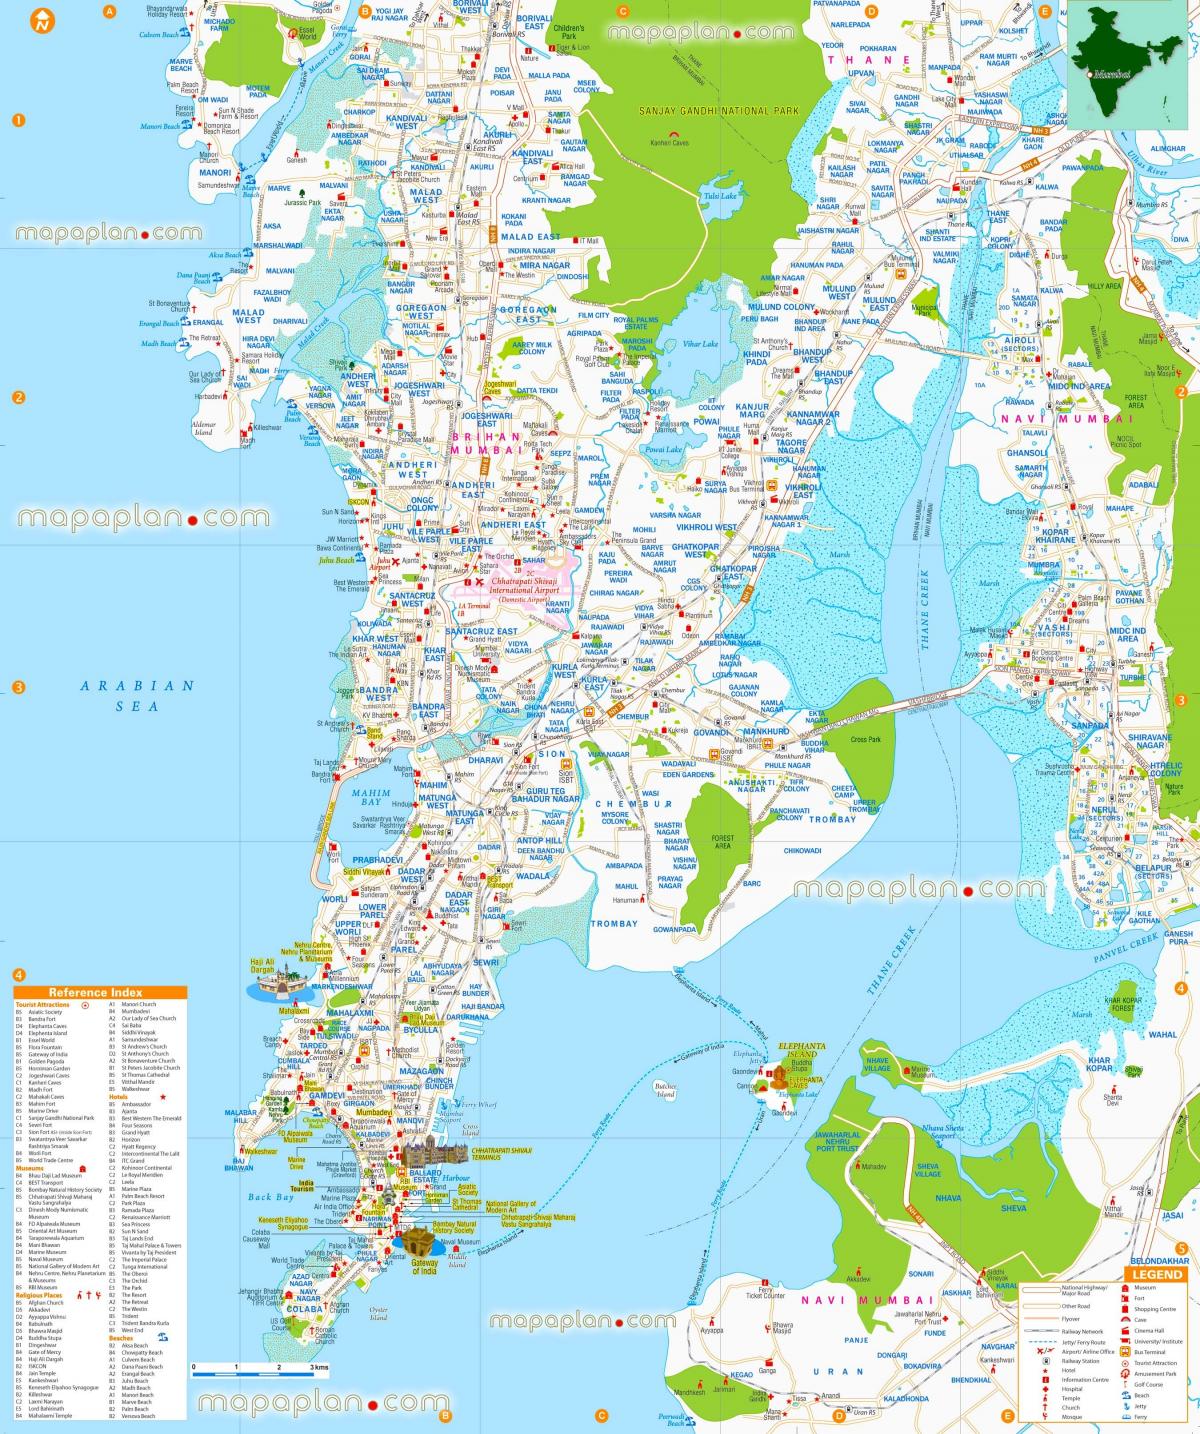 Mappa turistica di Mumbai - Bombay